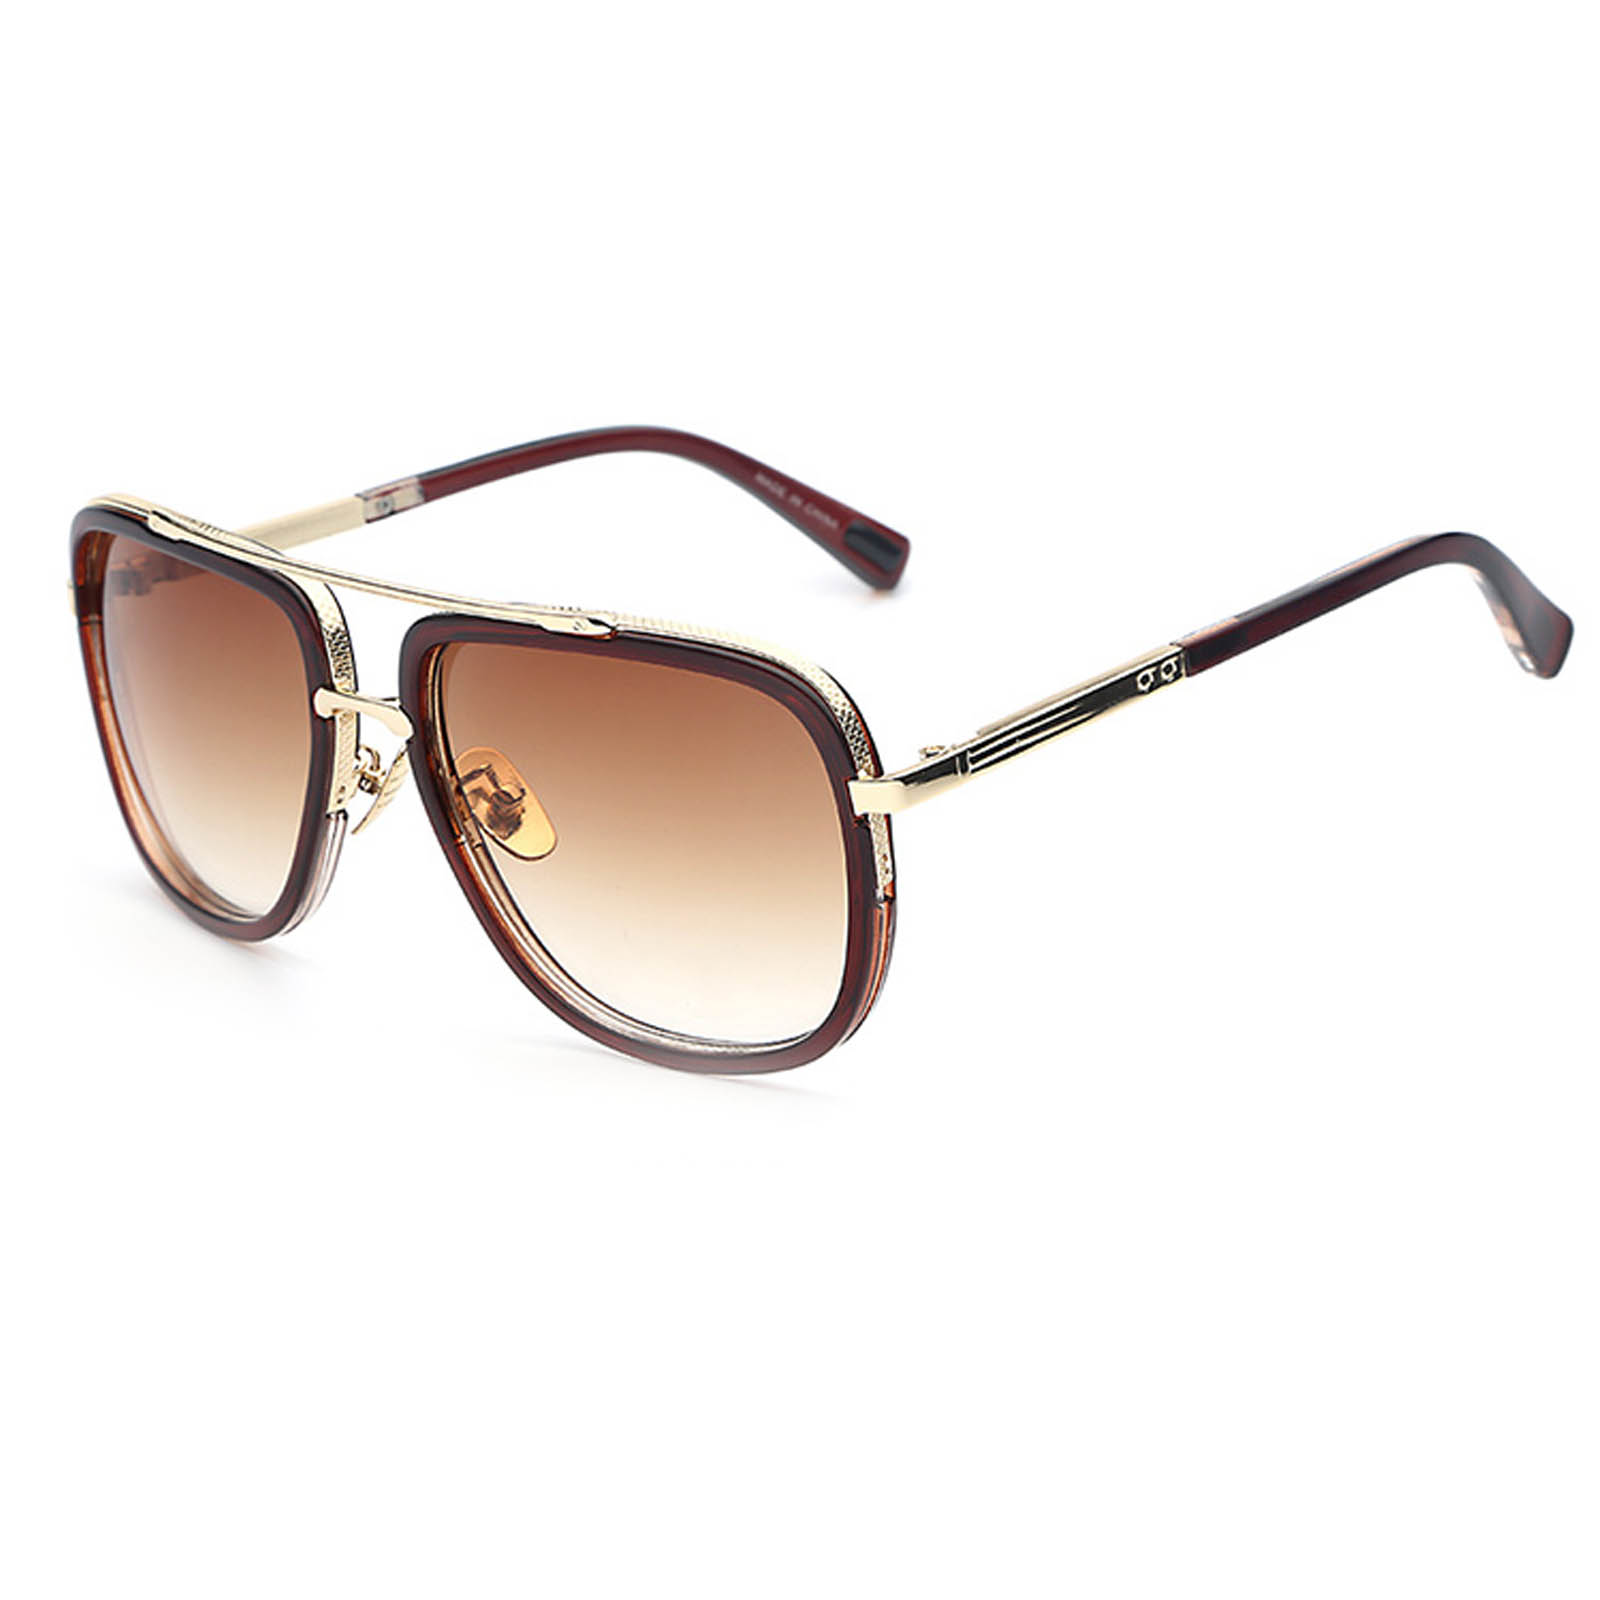 OWL ® 011 C3 Eyewear Sunglasses Women’s Men’s Metal Brown Frame Brown ...